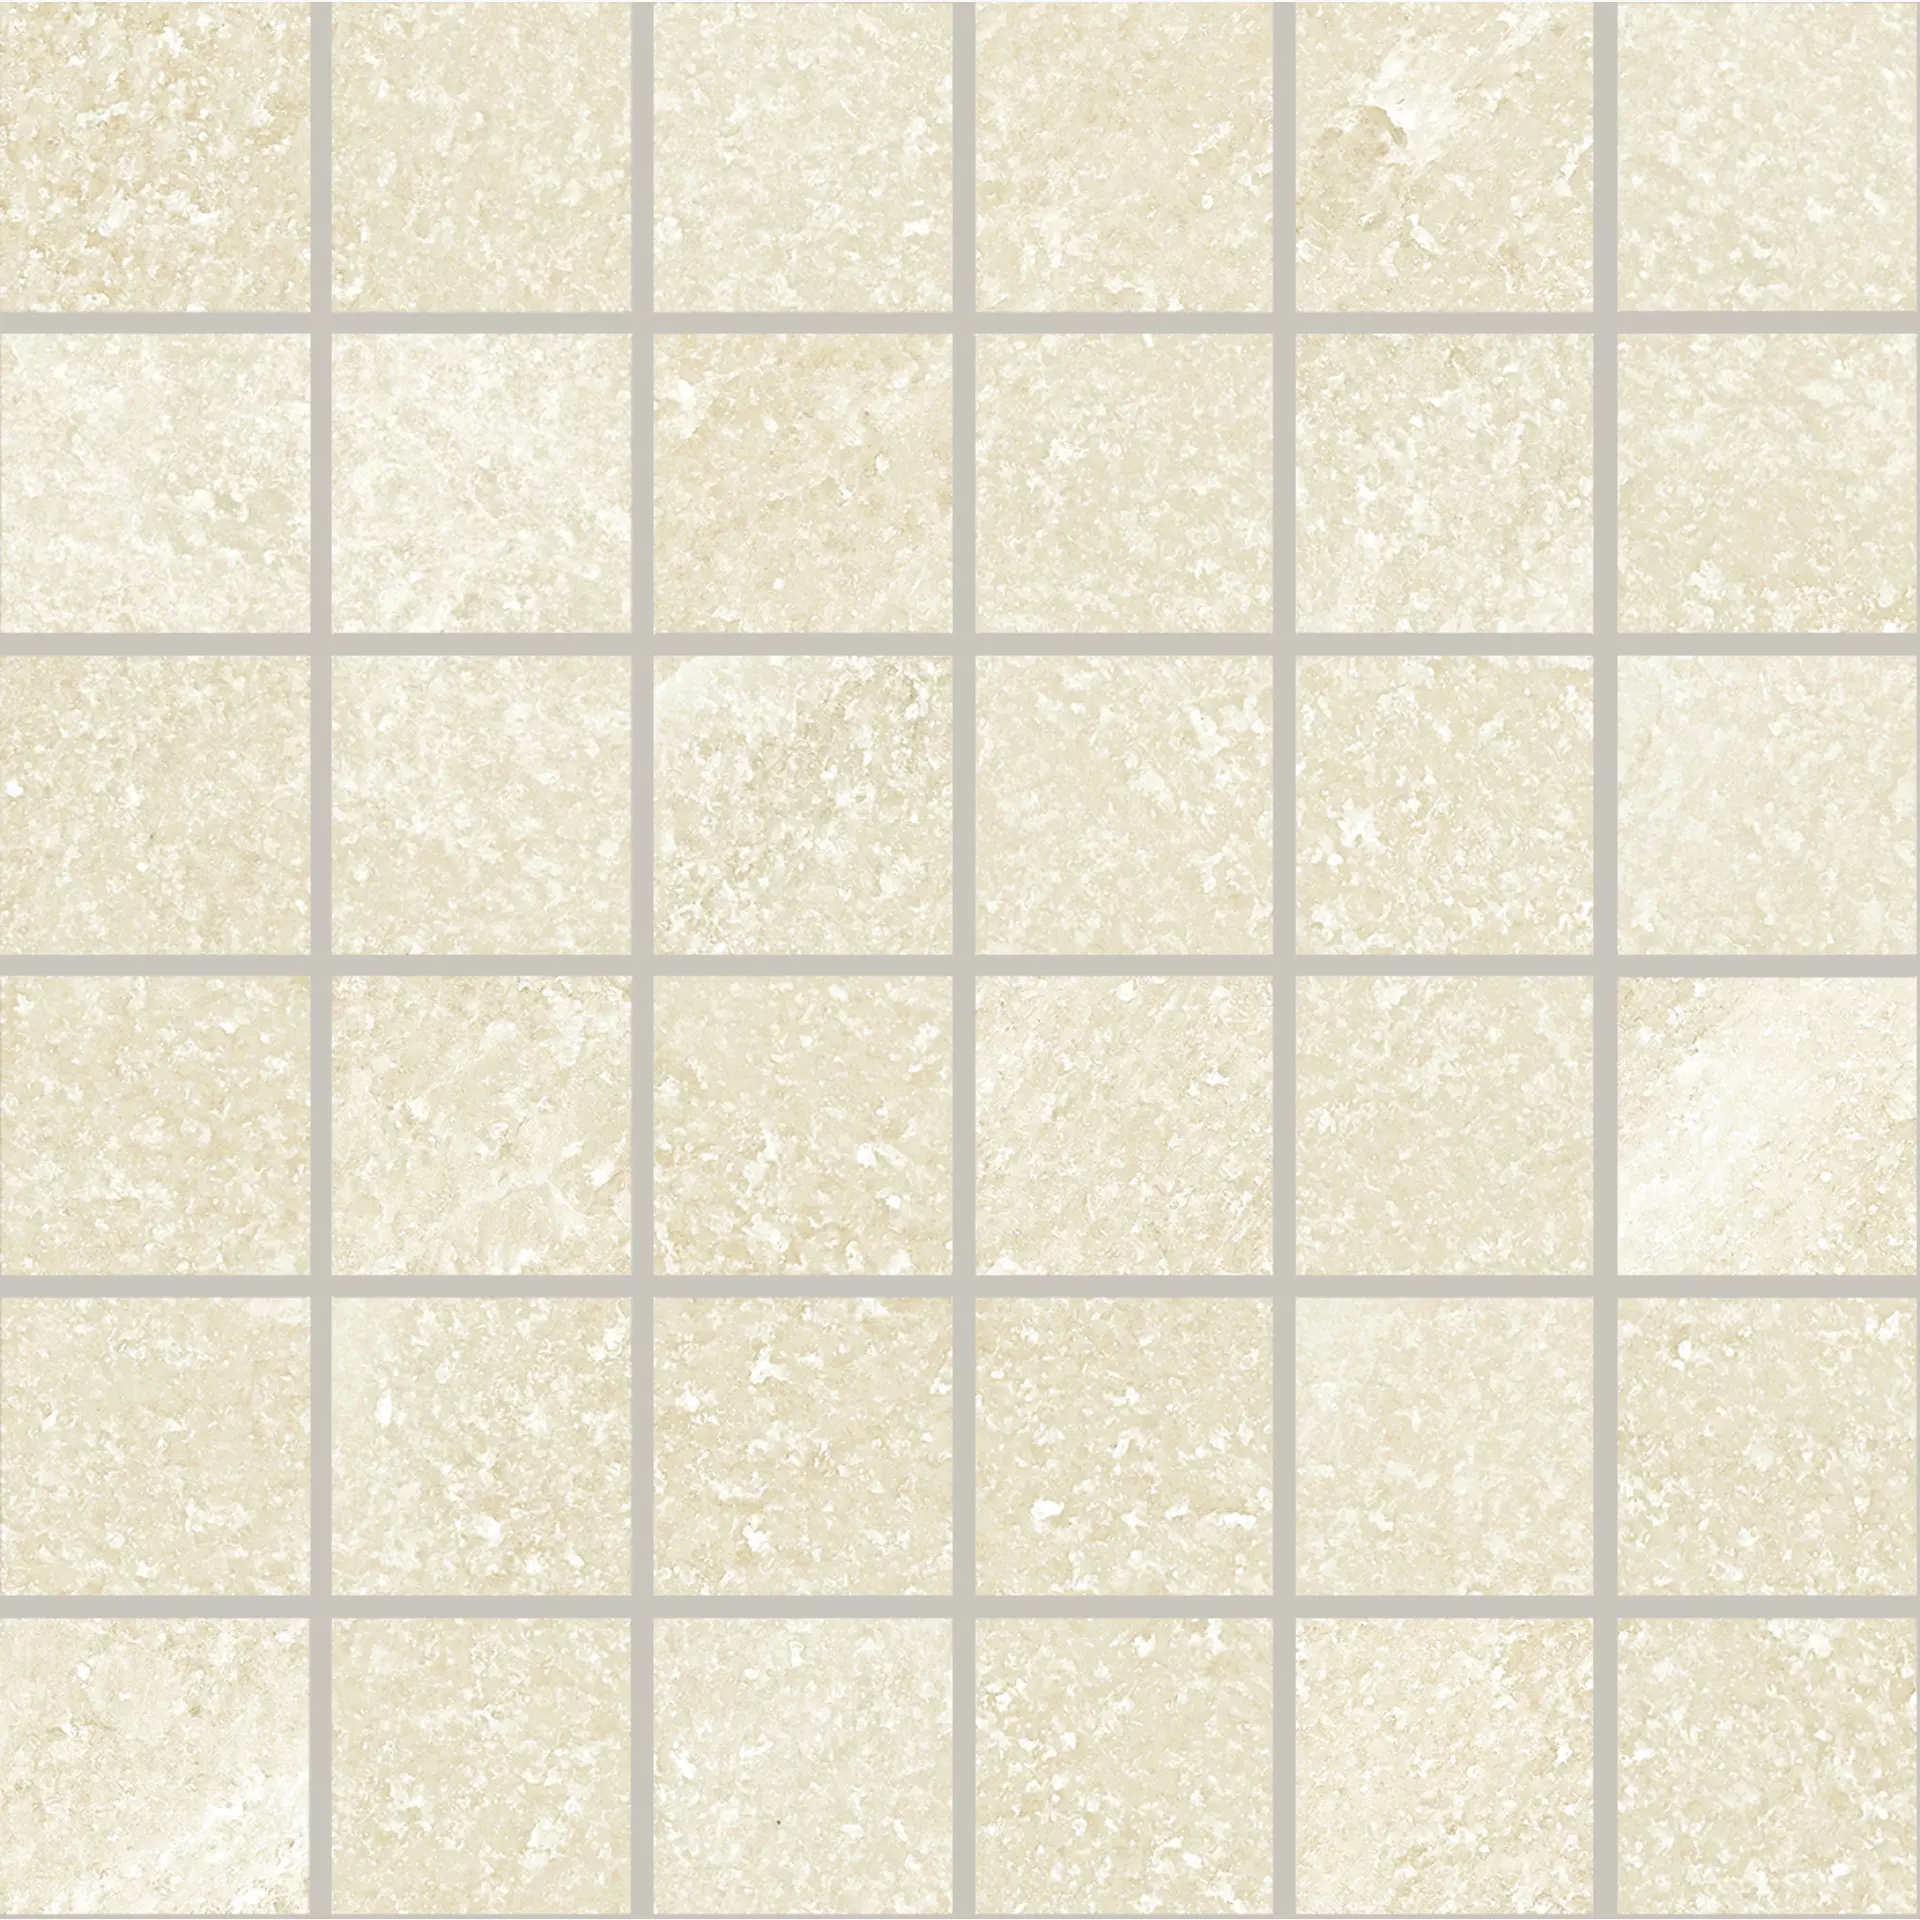 Provenza Salt Stone Sand Dust Full Lappato Sand Dust EM4K gelaeppt 30x30cm Mosaik 5x5 9,5mm